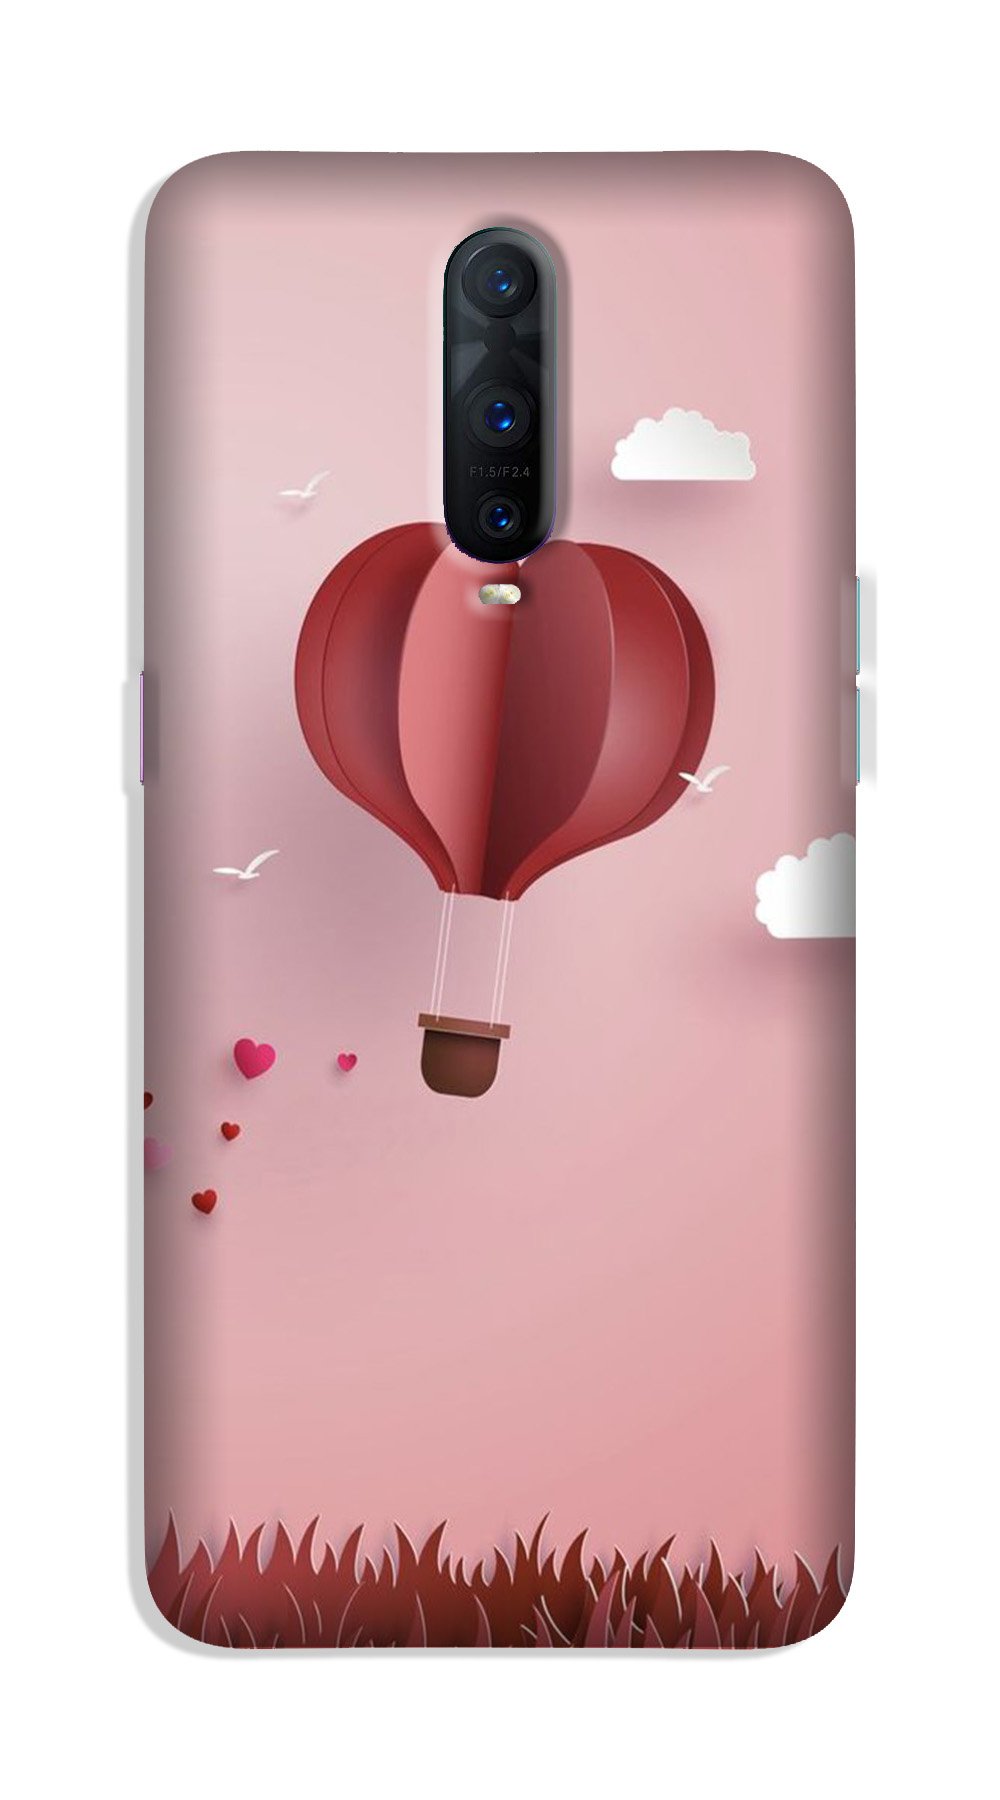 Parachute Case for OnePlus 7 Pro (Design No. 286)